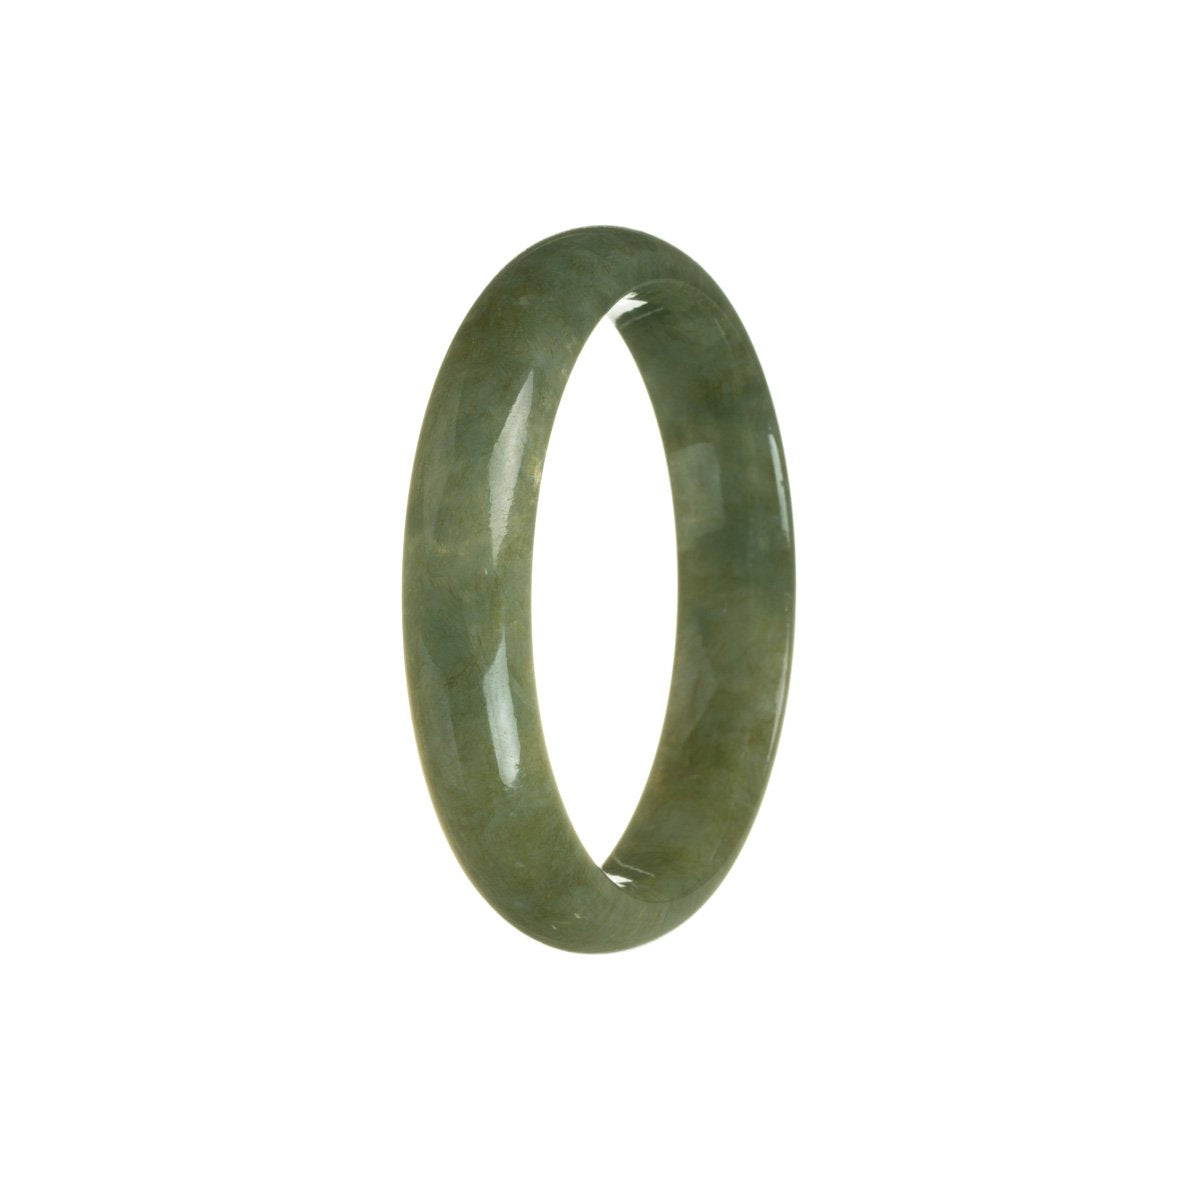 Authentic Grade A Brownish Green Burmese Jade Bangle - 56mm Half Moon